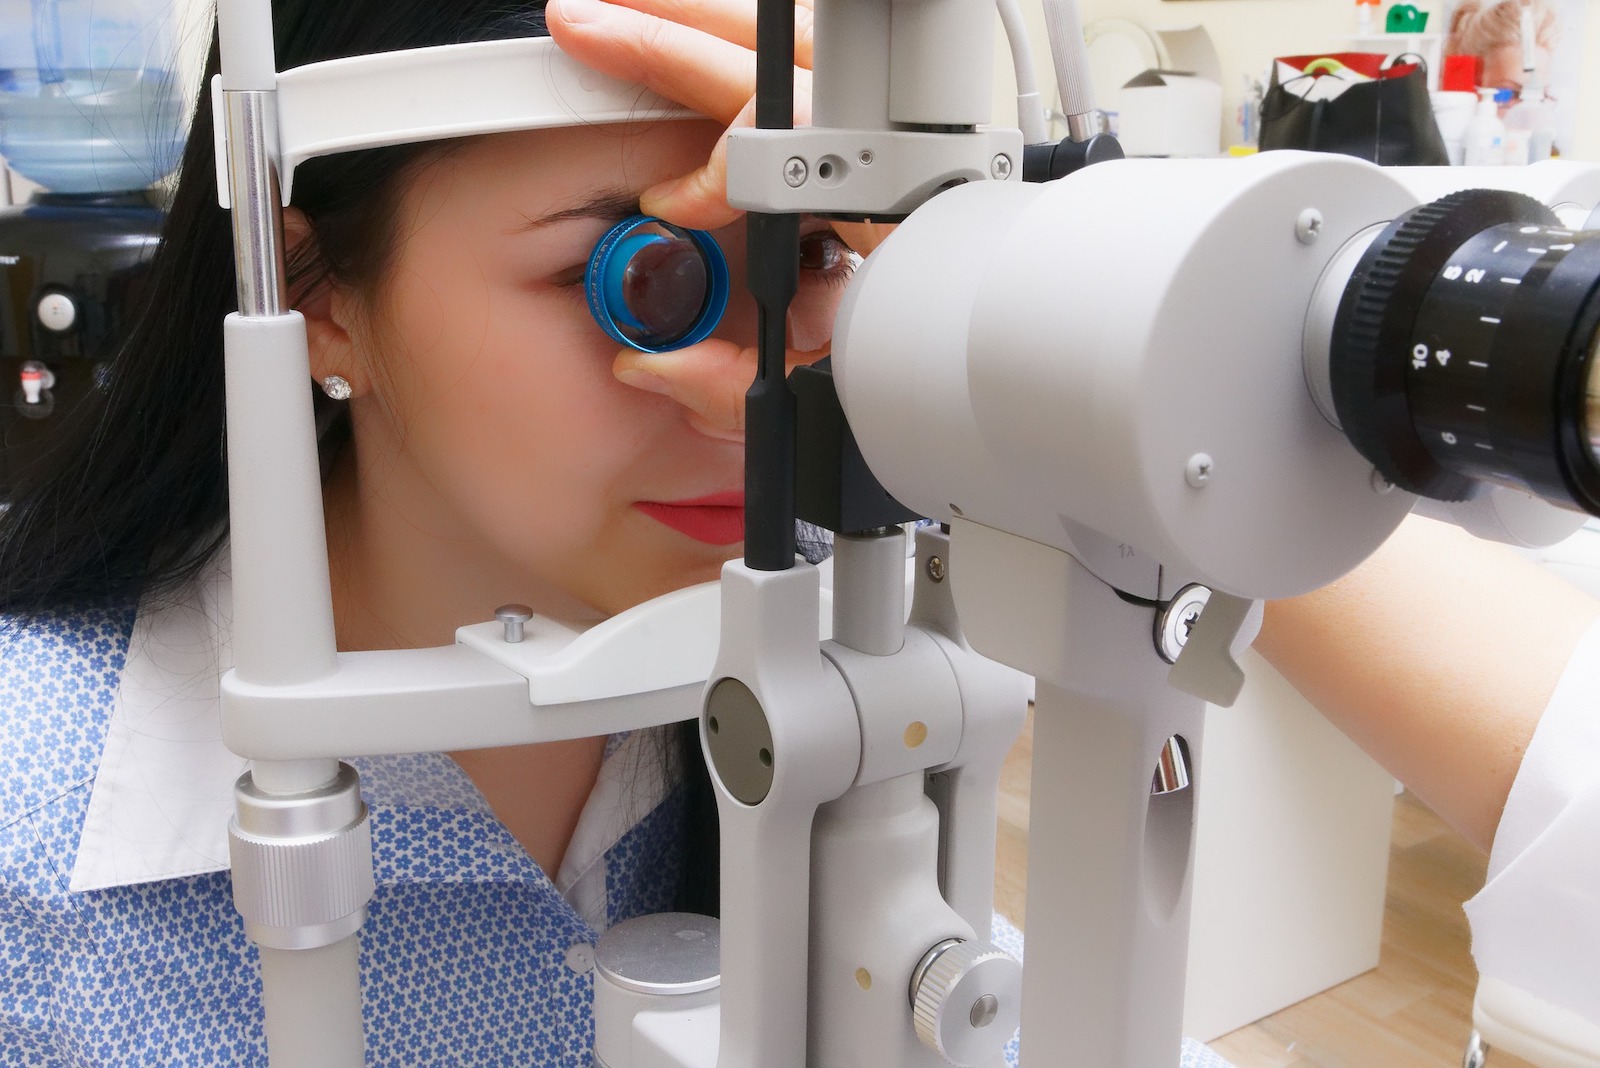 mituri despre glaucom ochi